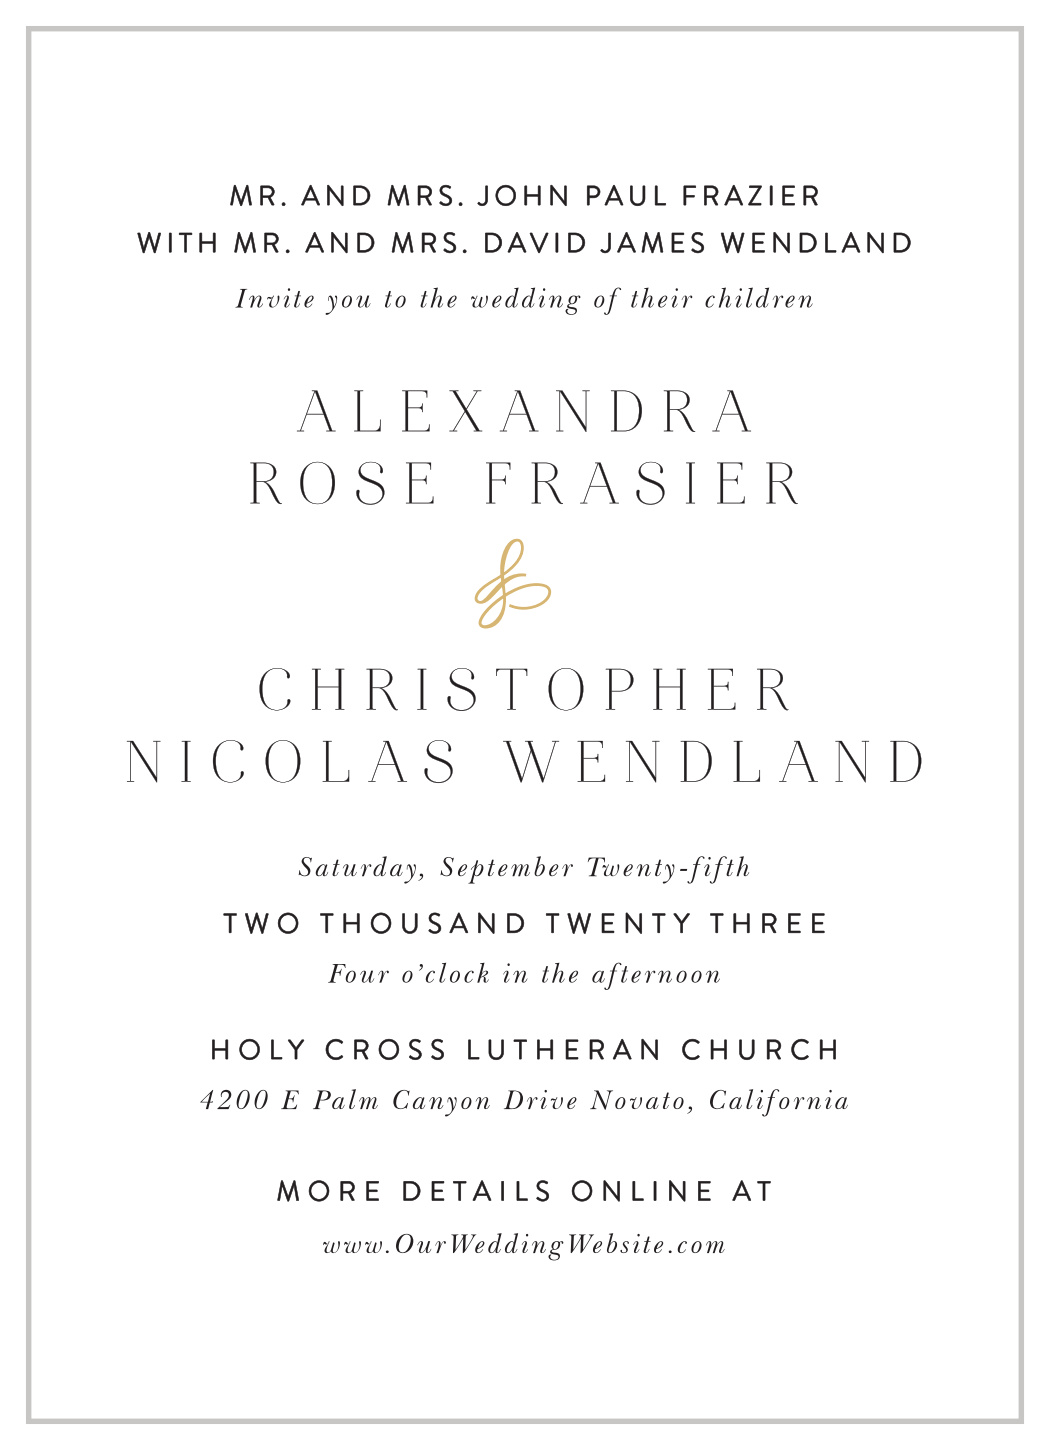 Simply Classy Wedding Invitations